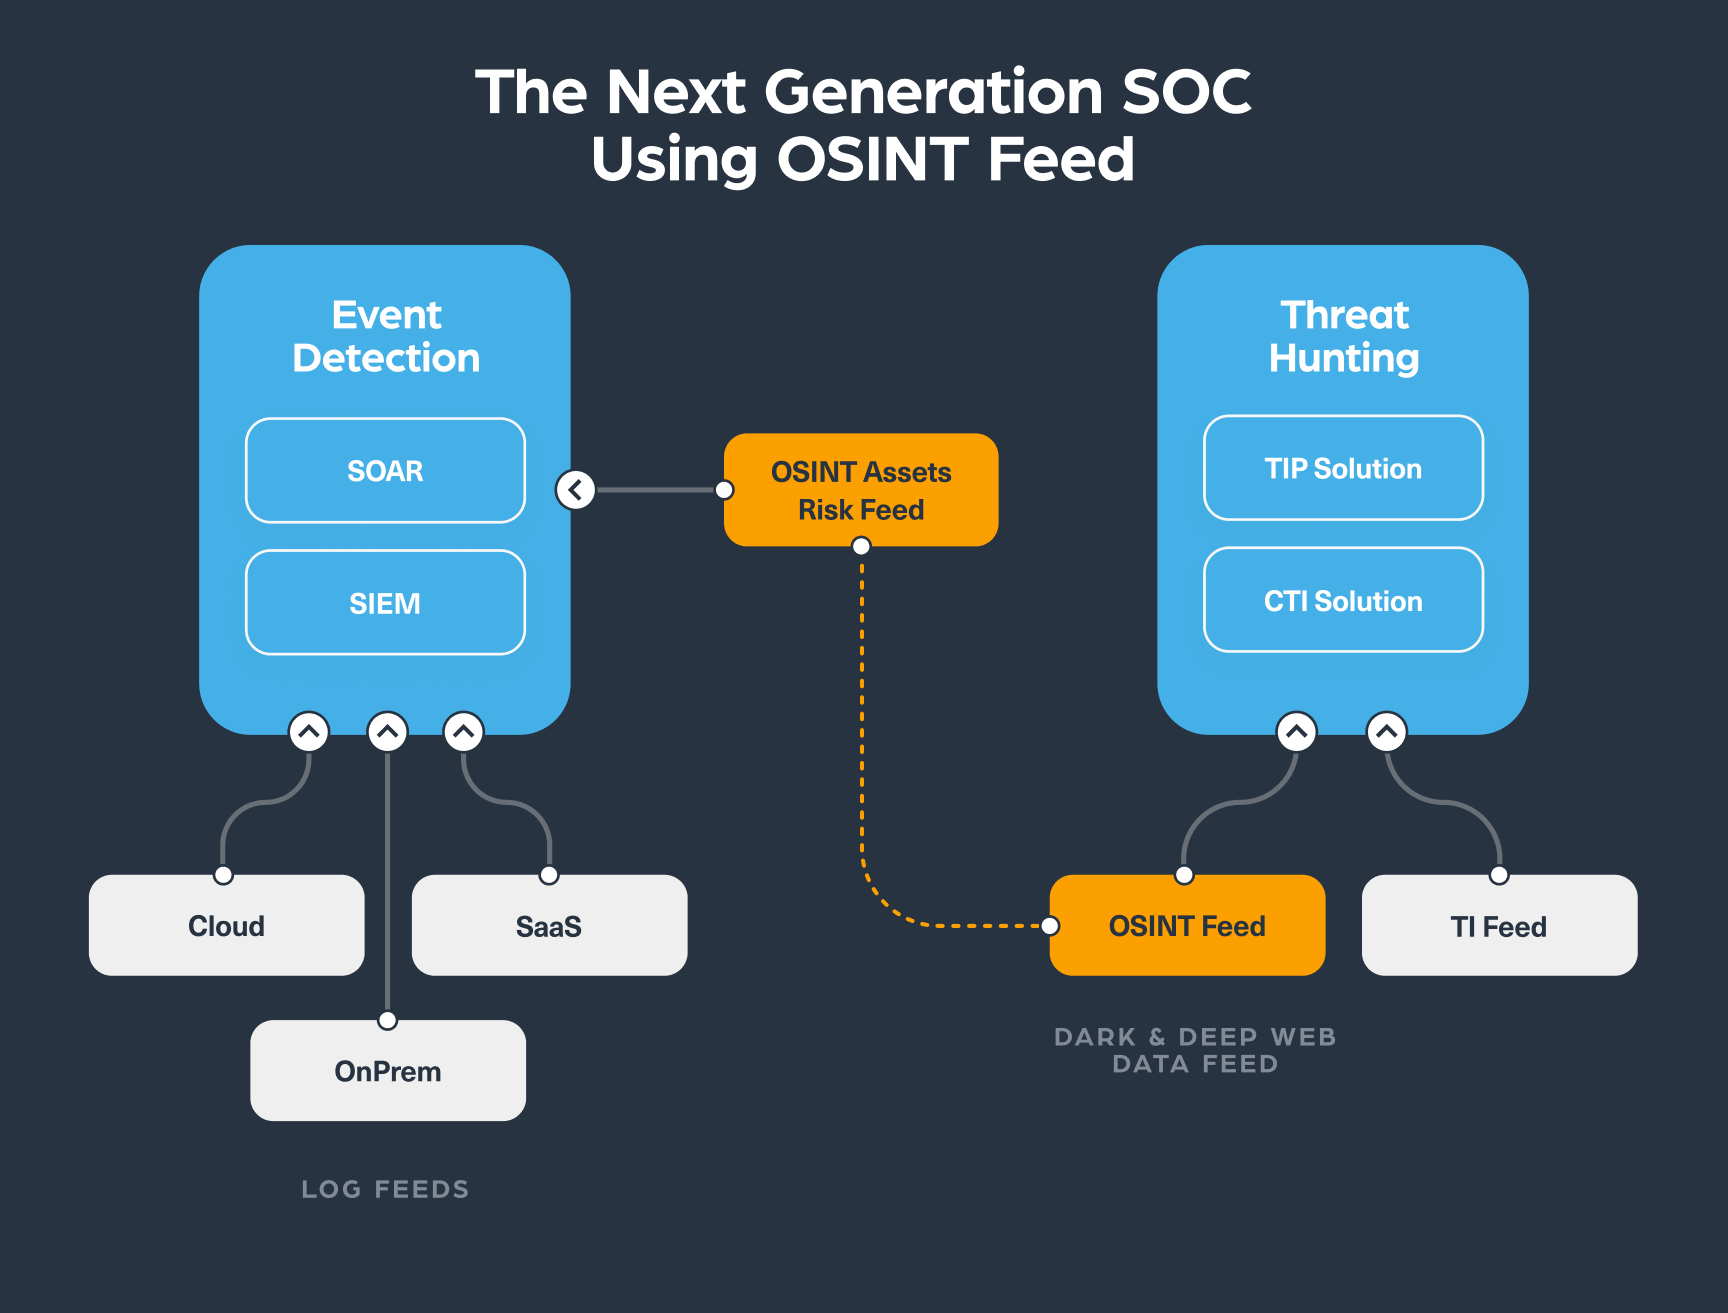 The next generation SOC using OSINT feed